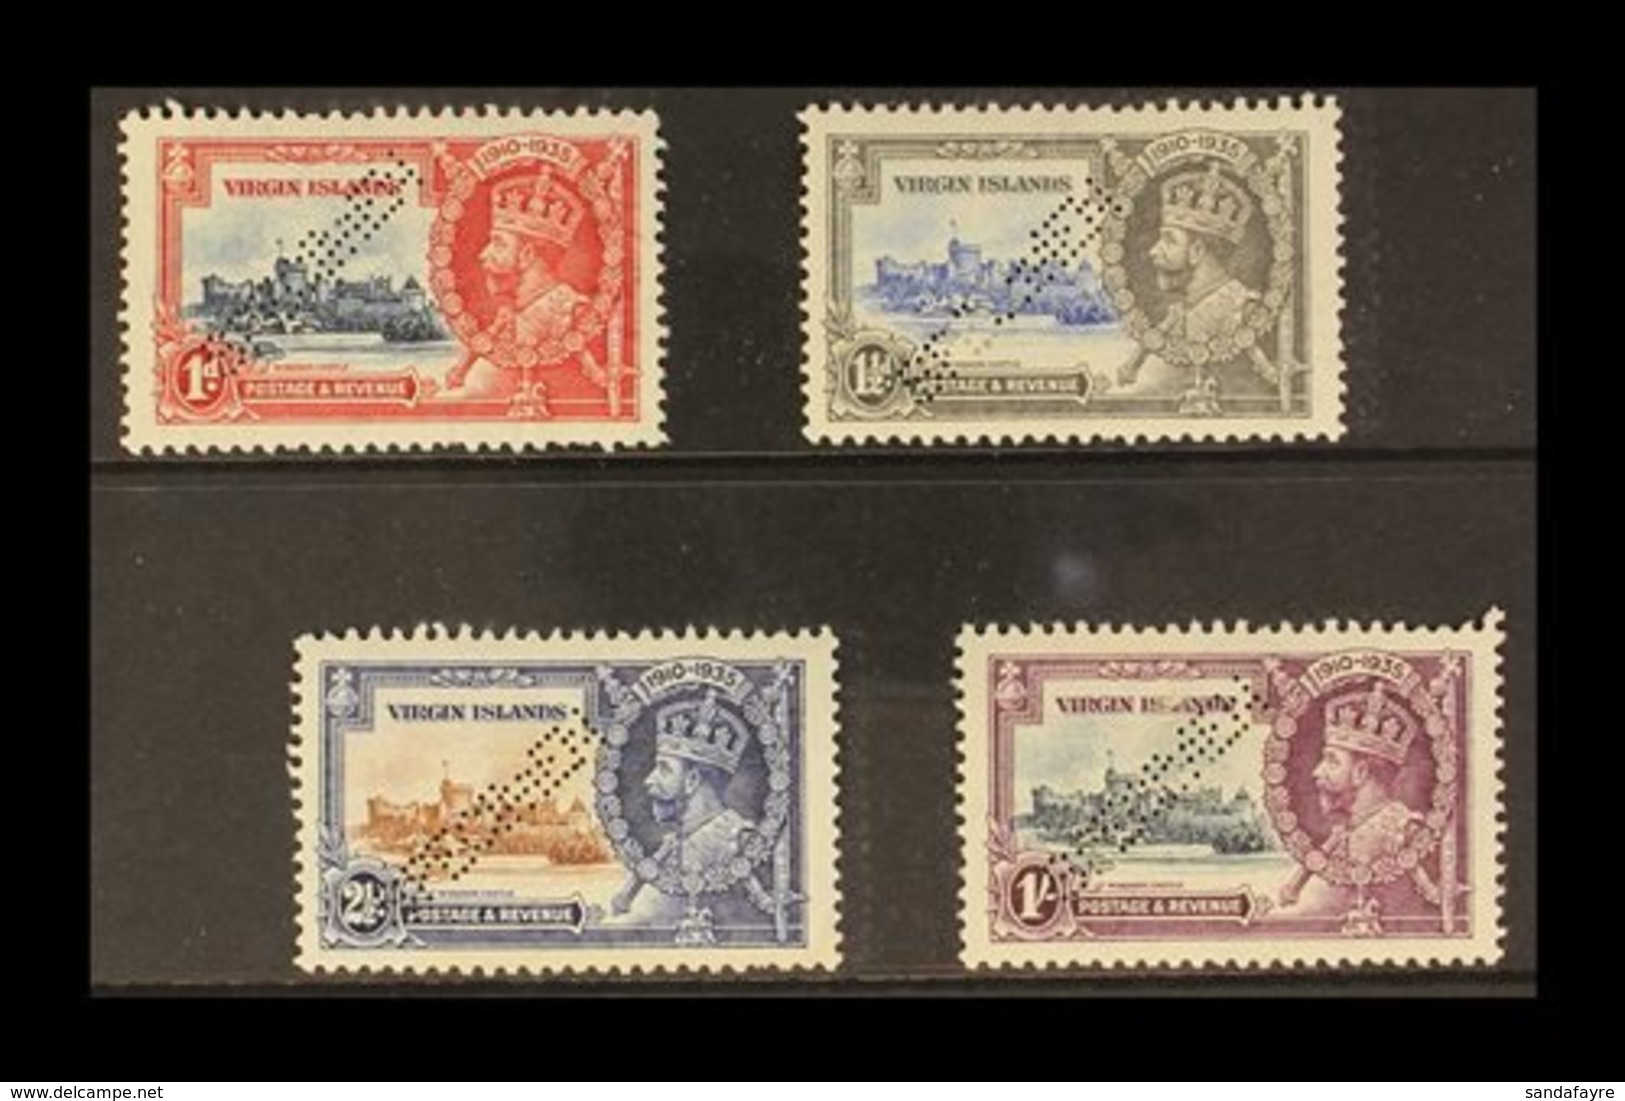 1935 Silver Jubilee Complete Set Perforated "SPECIMEN", SG 103s/106s, Fine Mint. (4 Stamps) For More Images, Please Visi - British Virgin Islands